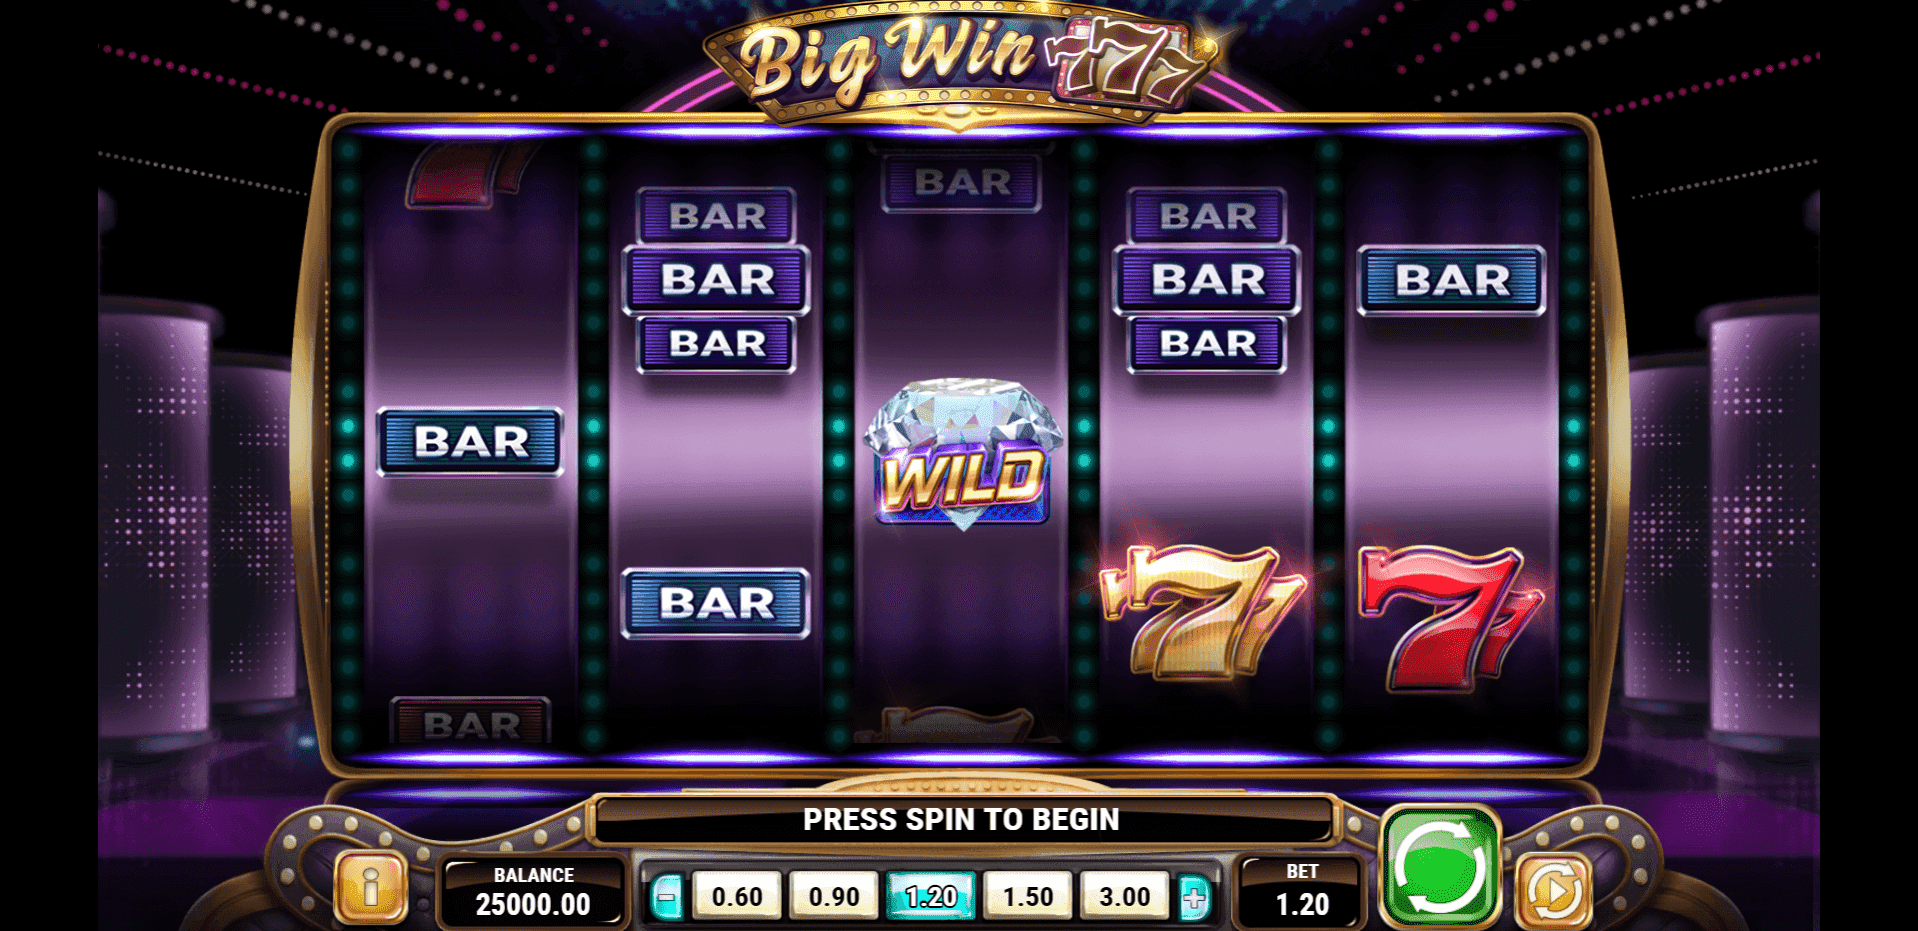 Big Win 777 Slot Machine \u15ce Play FREE Casino Game Online by Play\u2019n GO